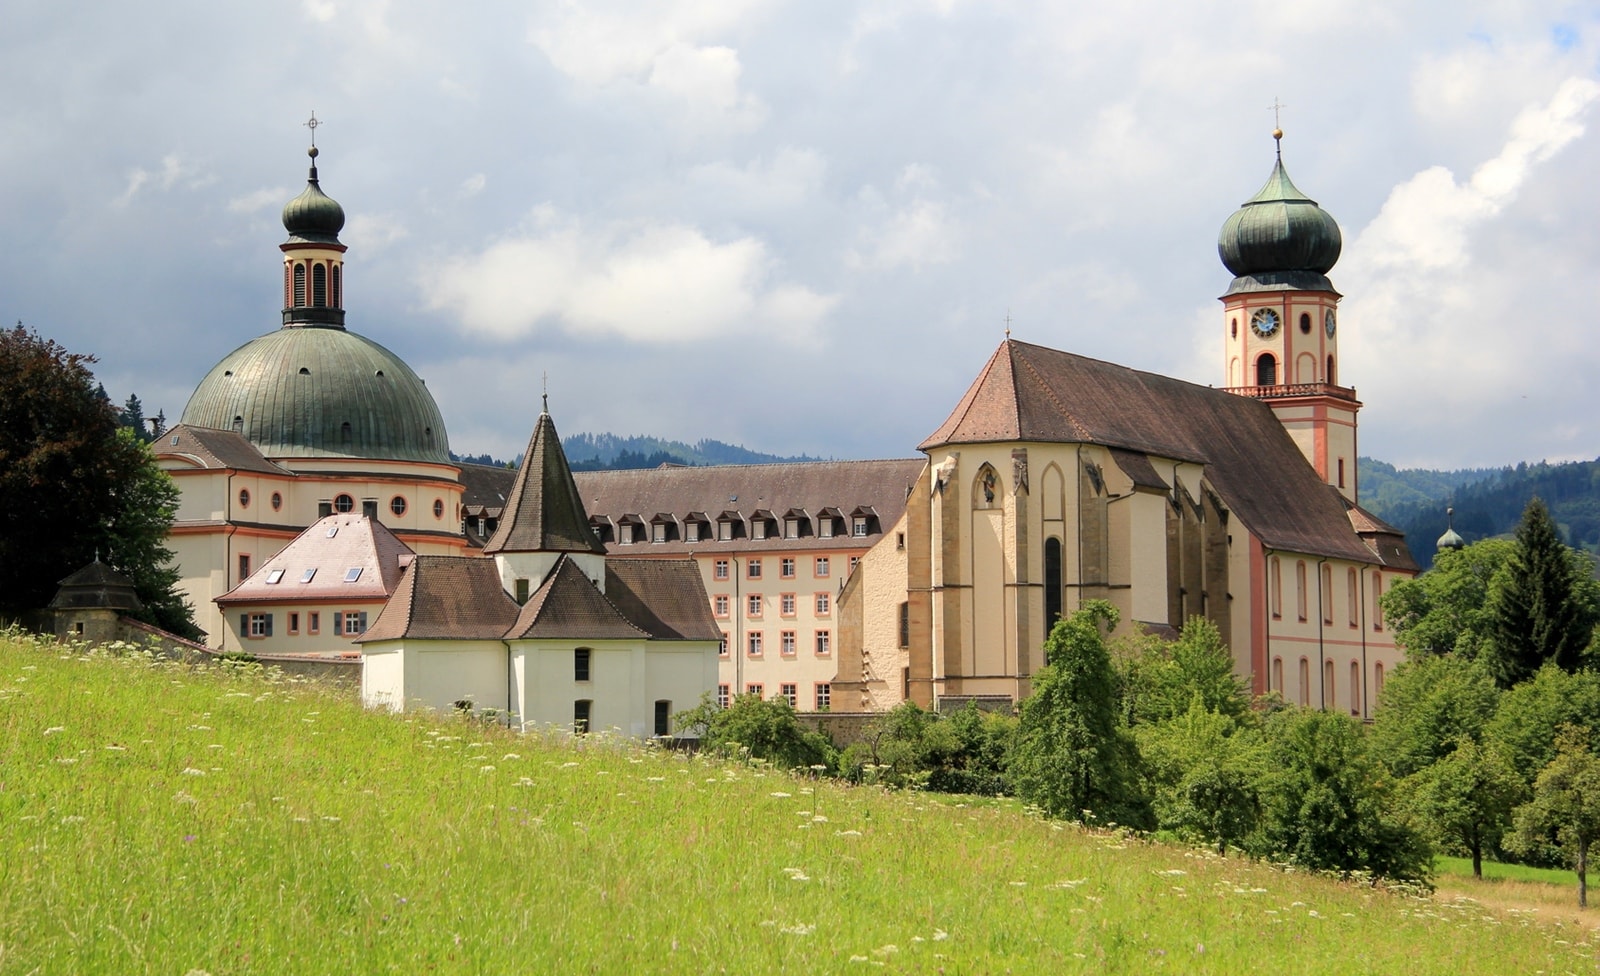 Kloster in Bayern